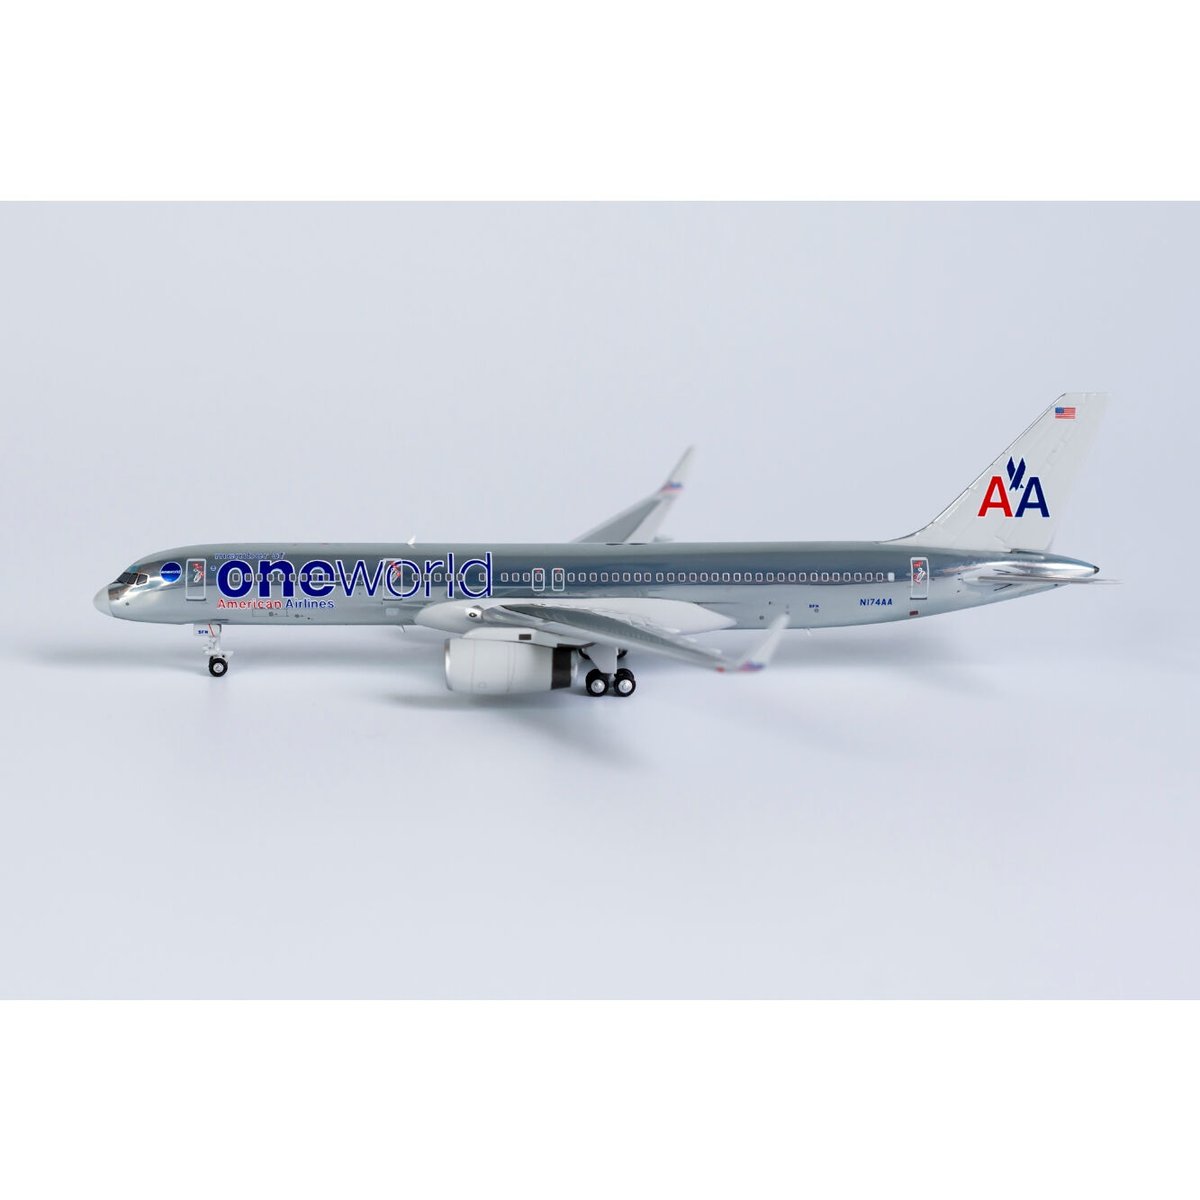 1/400 757-200/w アメリカン航空(ワンワールド塗装) N174AA